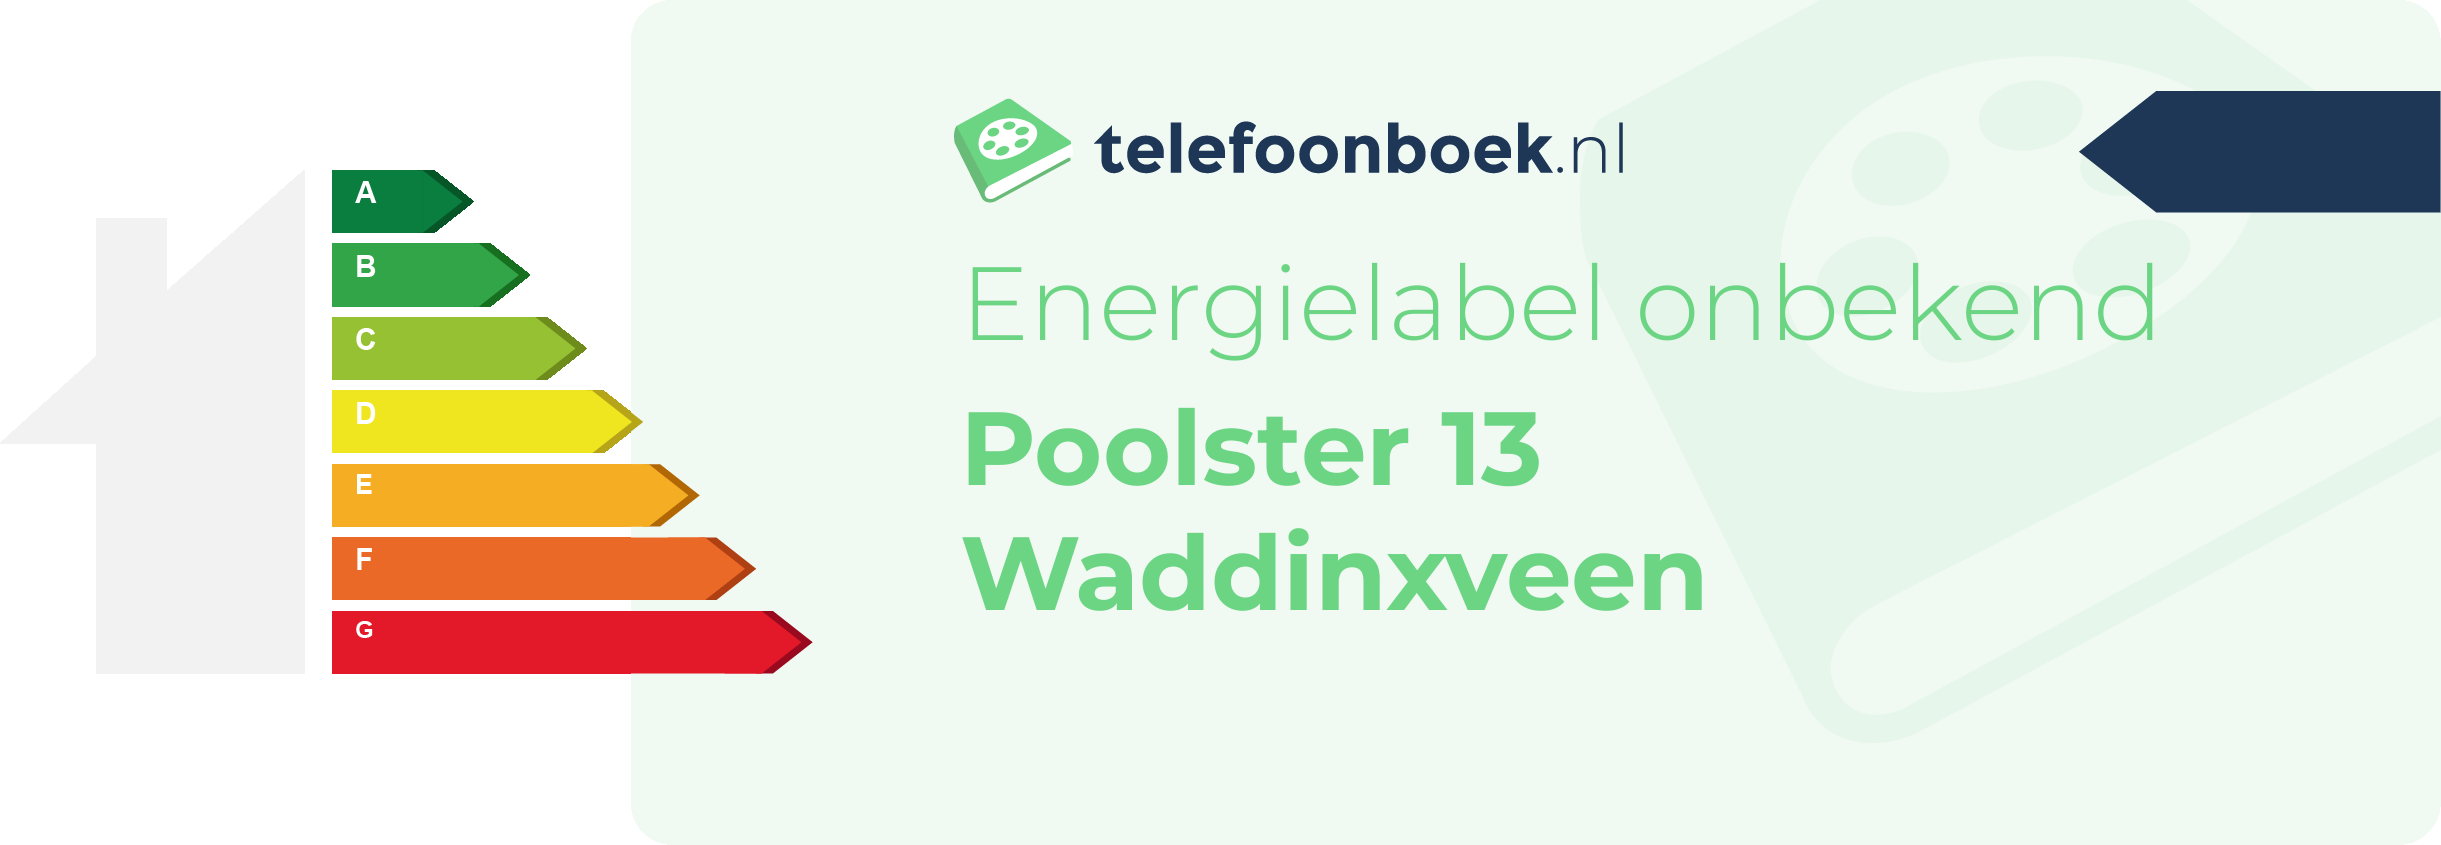 Energielabel Poolster 13 Waddinxveen